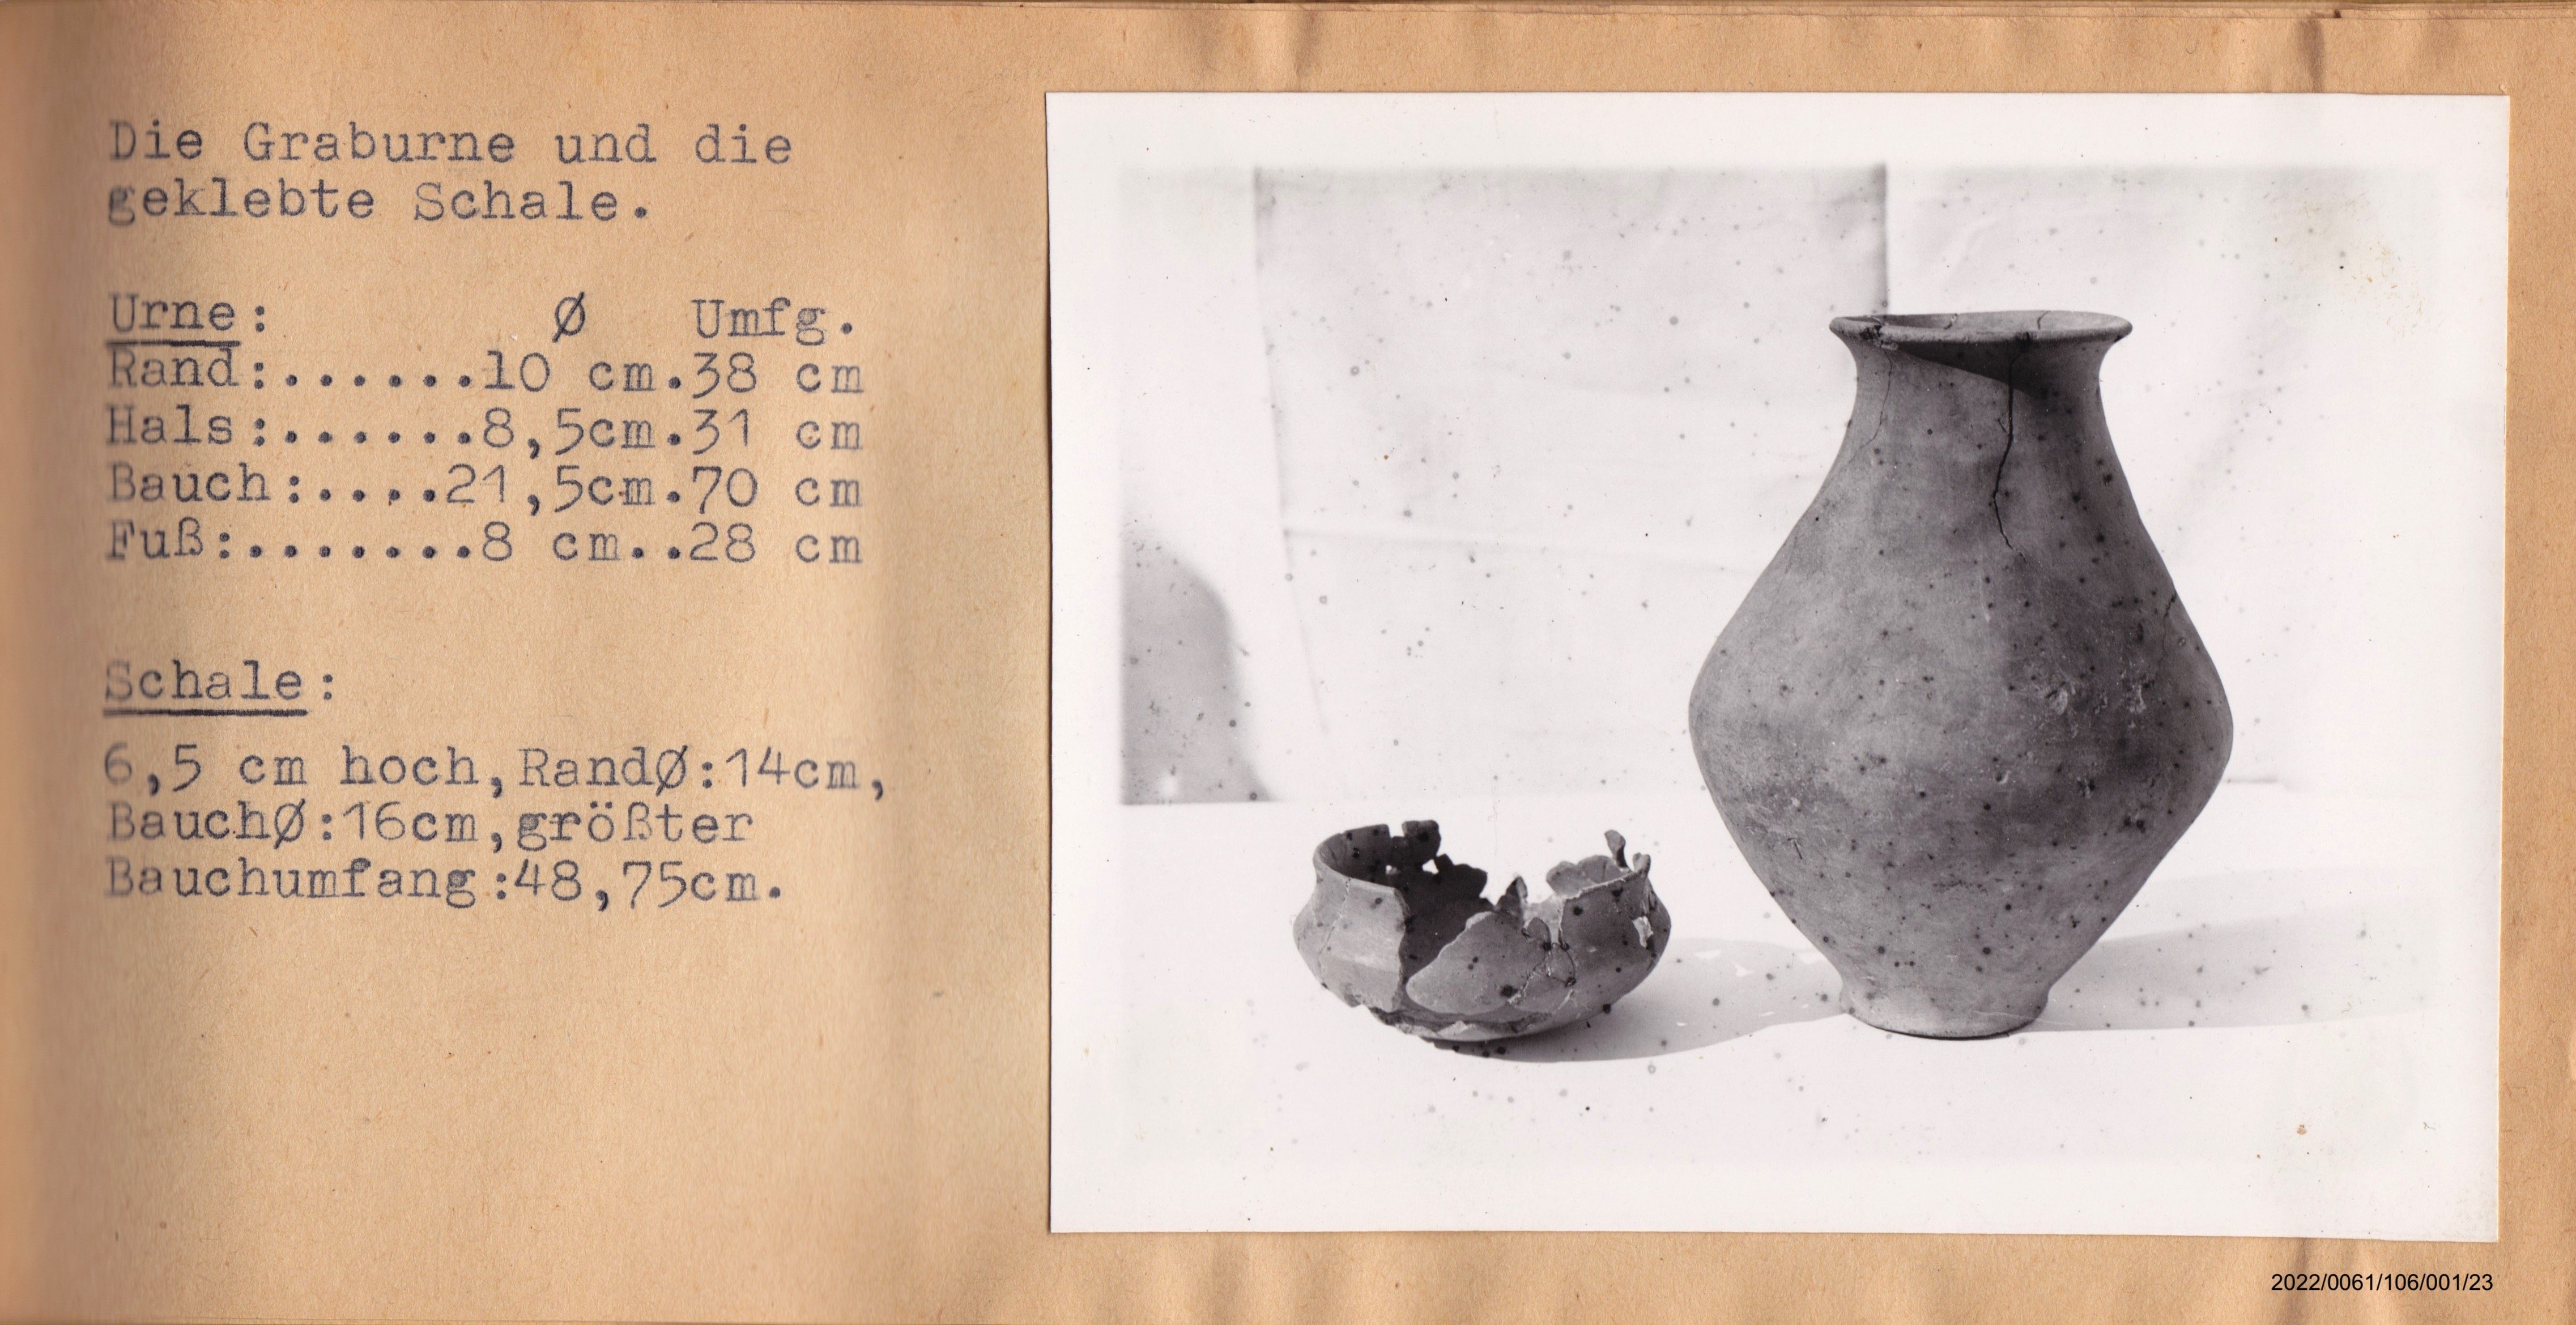 Album der Grabung am Ebersberg von 1935 Seite 23 (Museumsgesellschaft Bad Dürkheim e. V. CC BY-NC-SA)